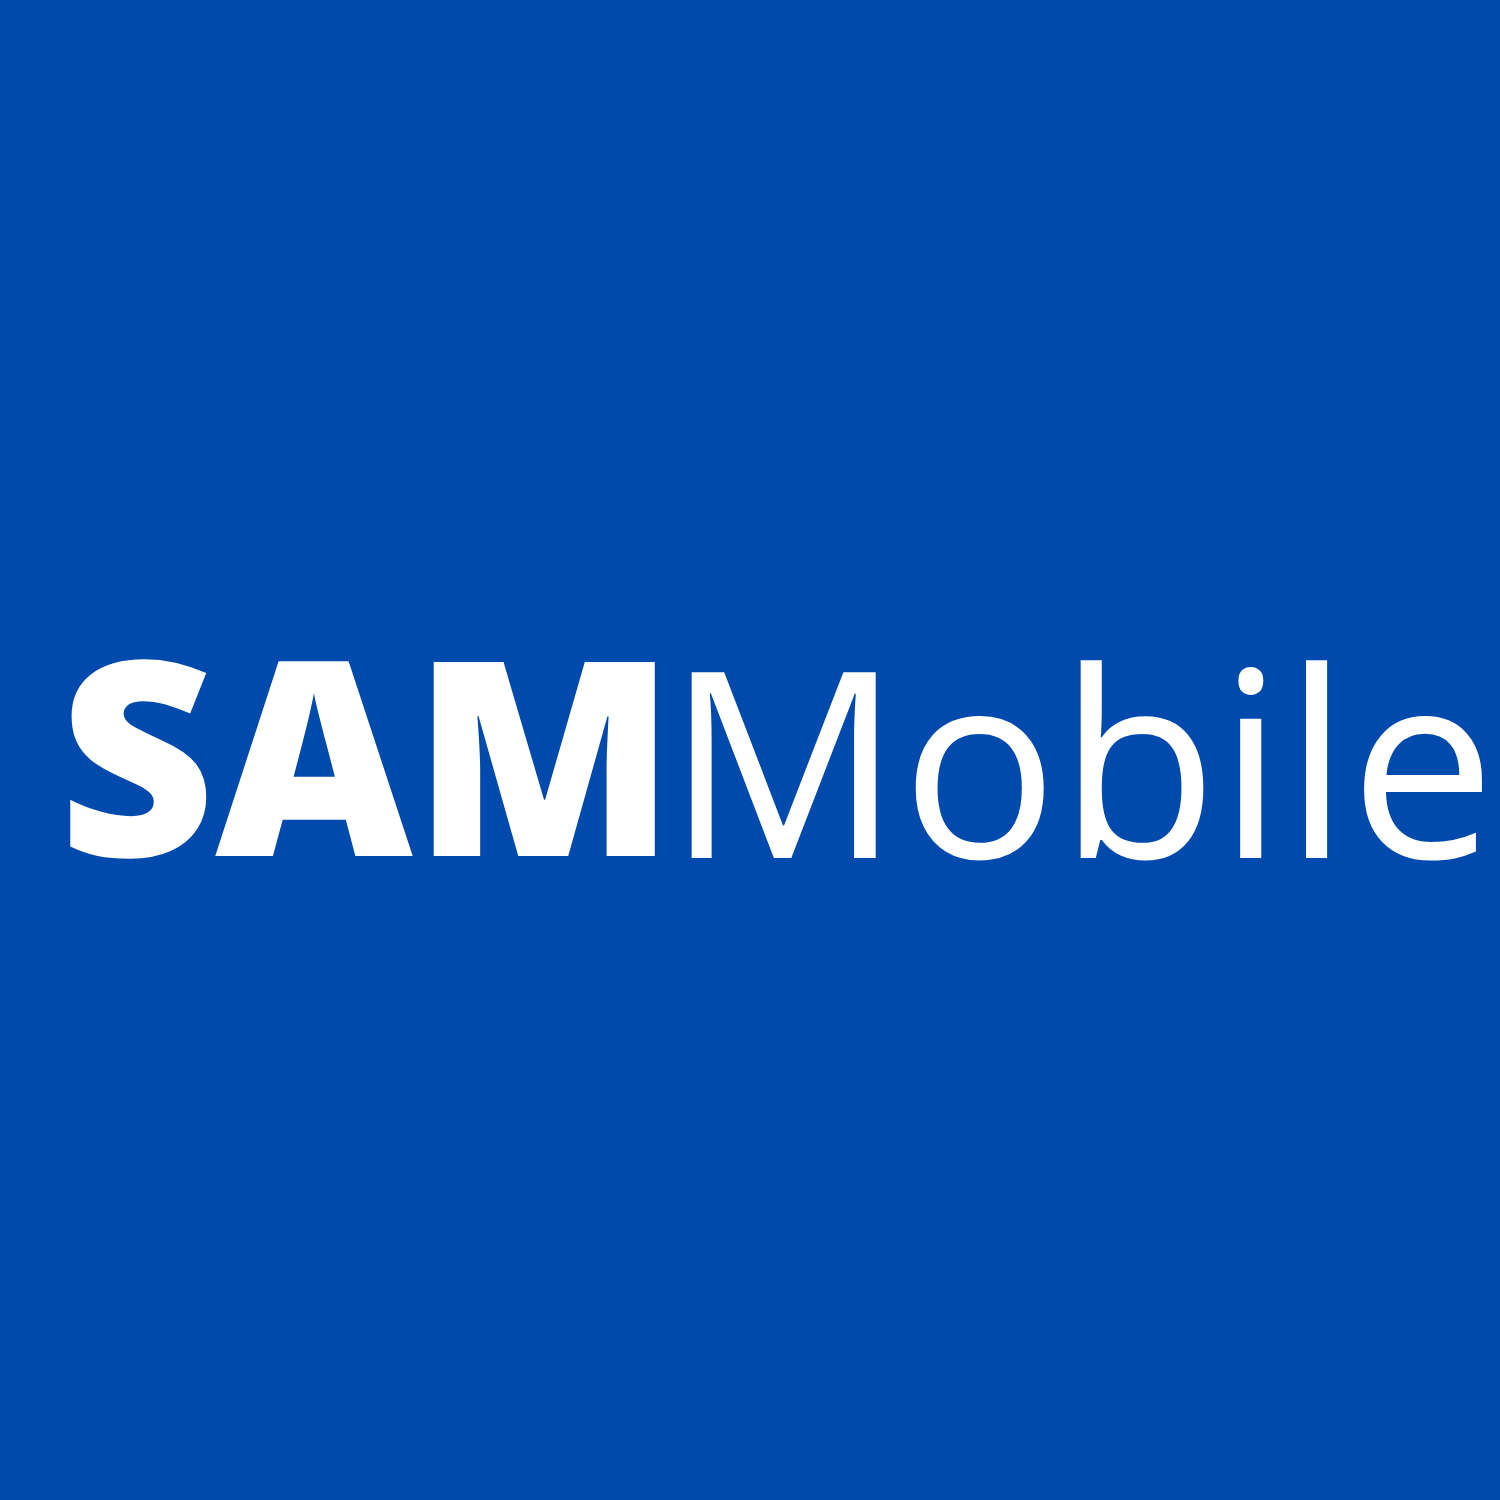 Top APKs on SamMobile this week - SamMobile